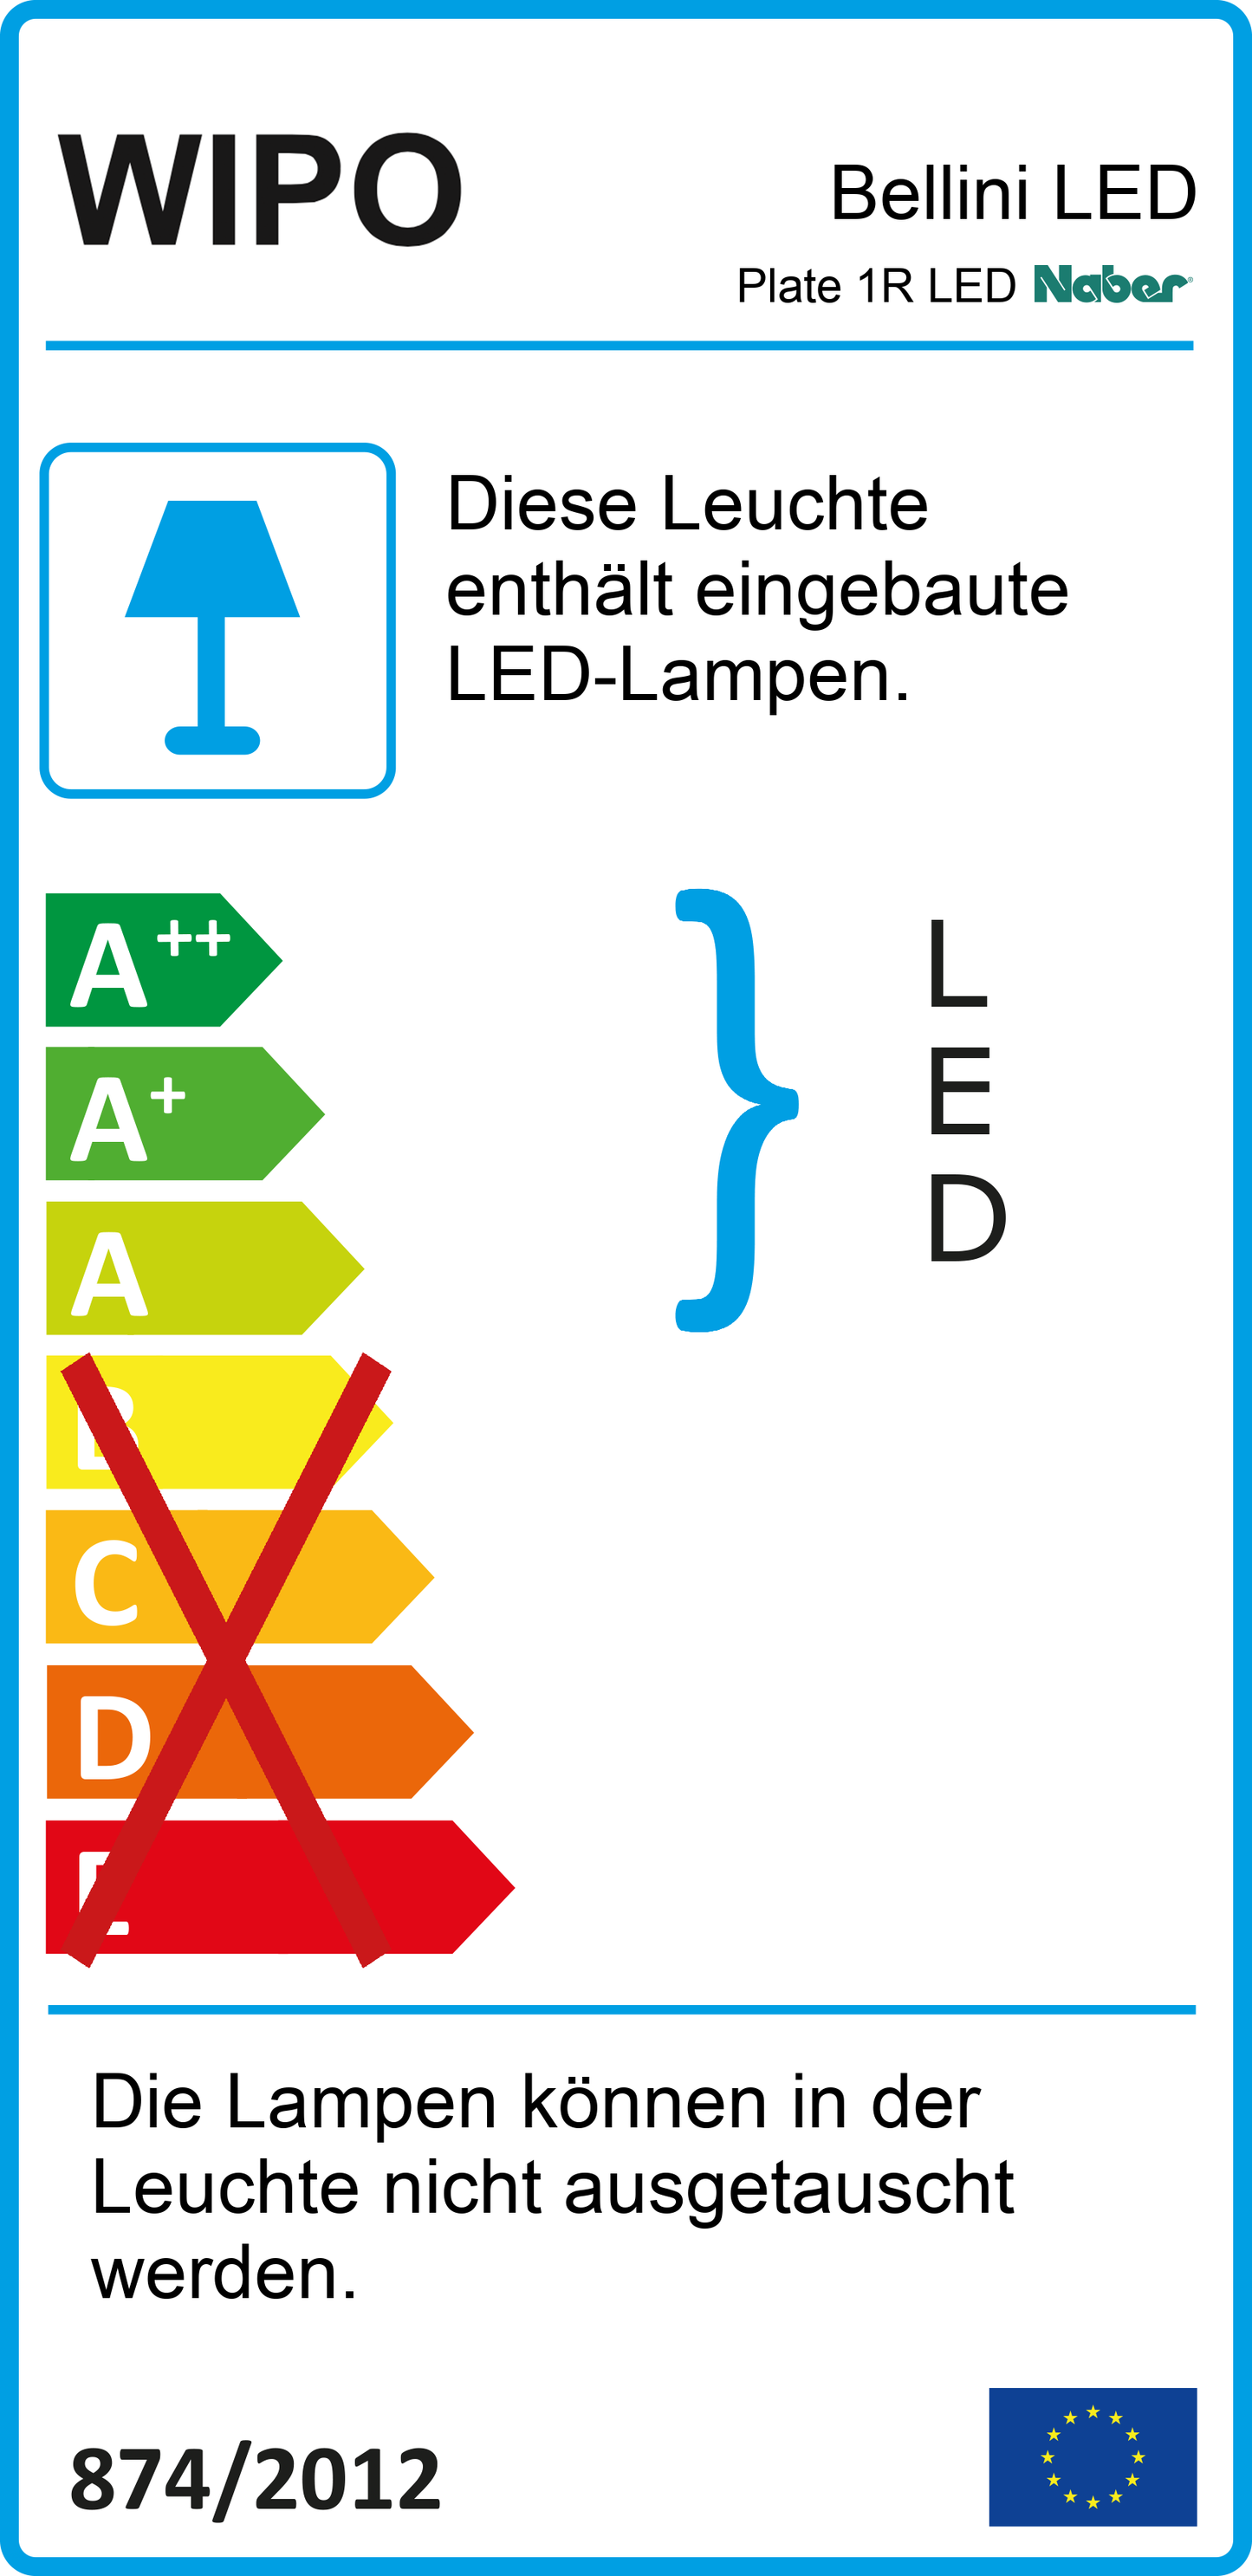 Plate 1R LED